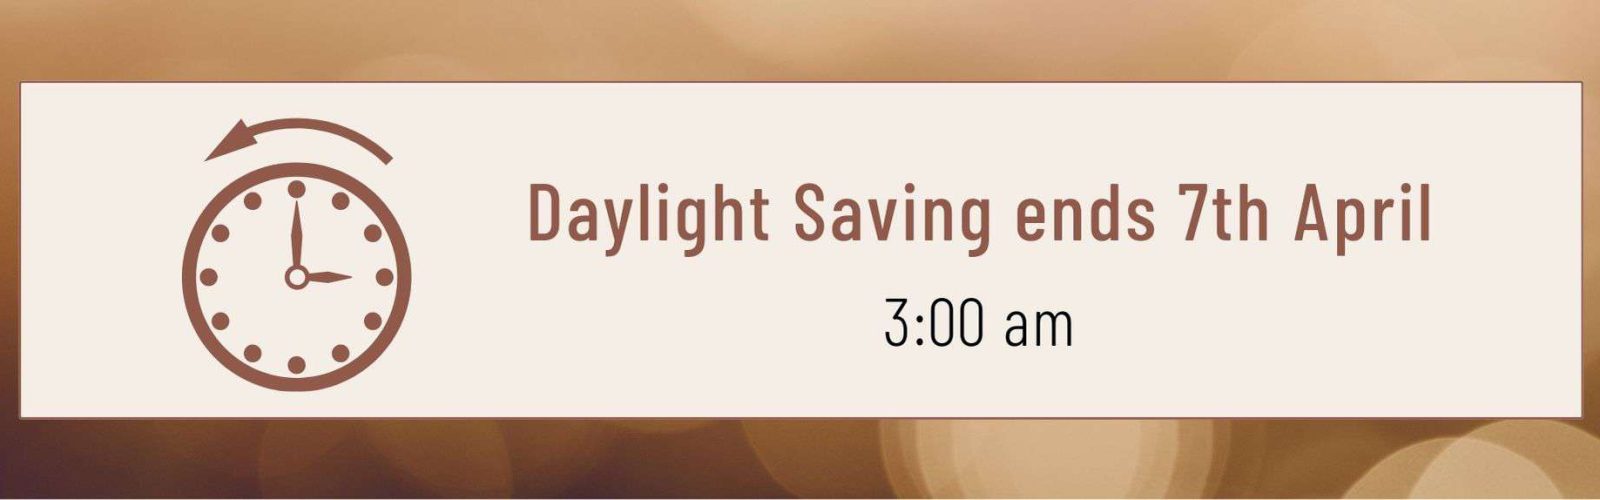 Daylight Saving ends